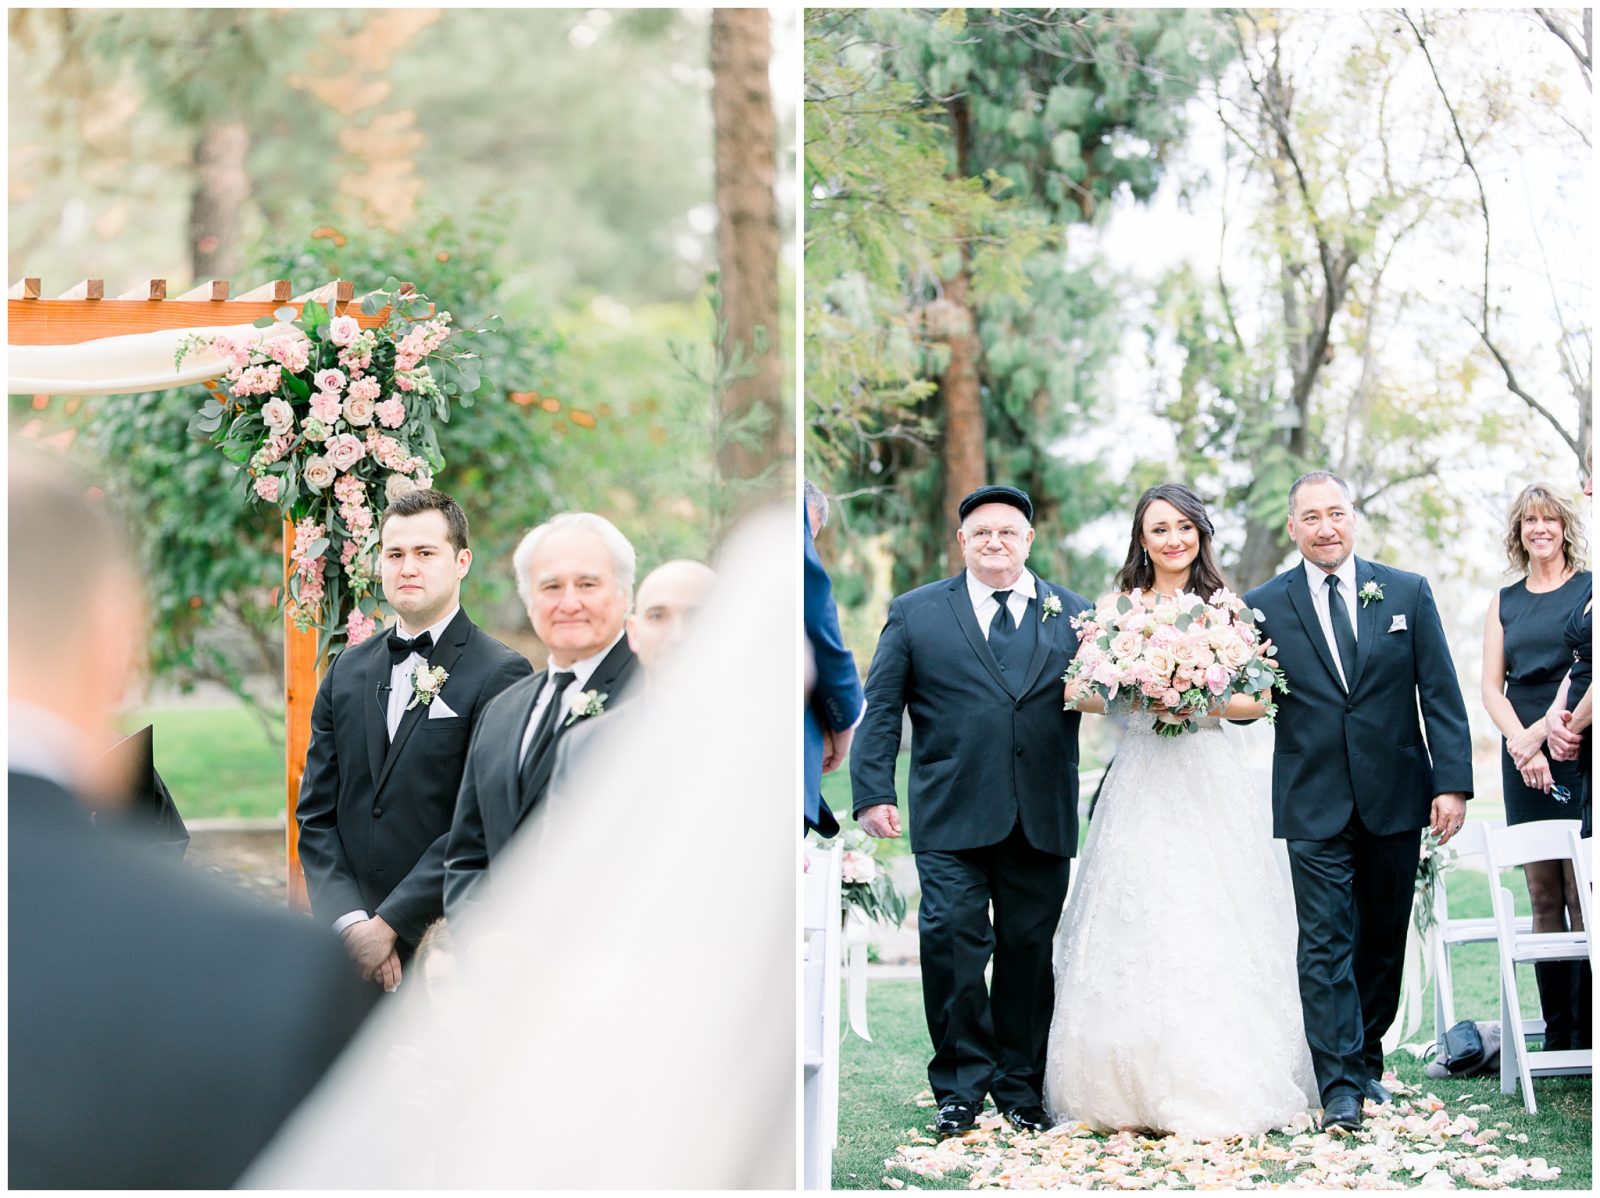 Aly-Kirk-Photo-Mesa-Arizona-Photographer-Chateau-de-Vie-Chandler-Wedding